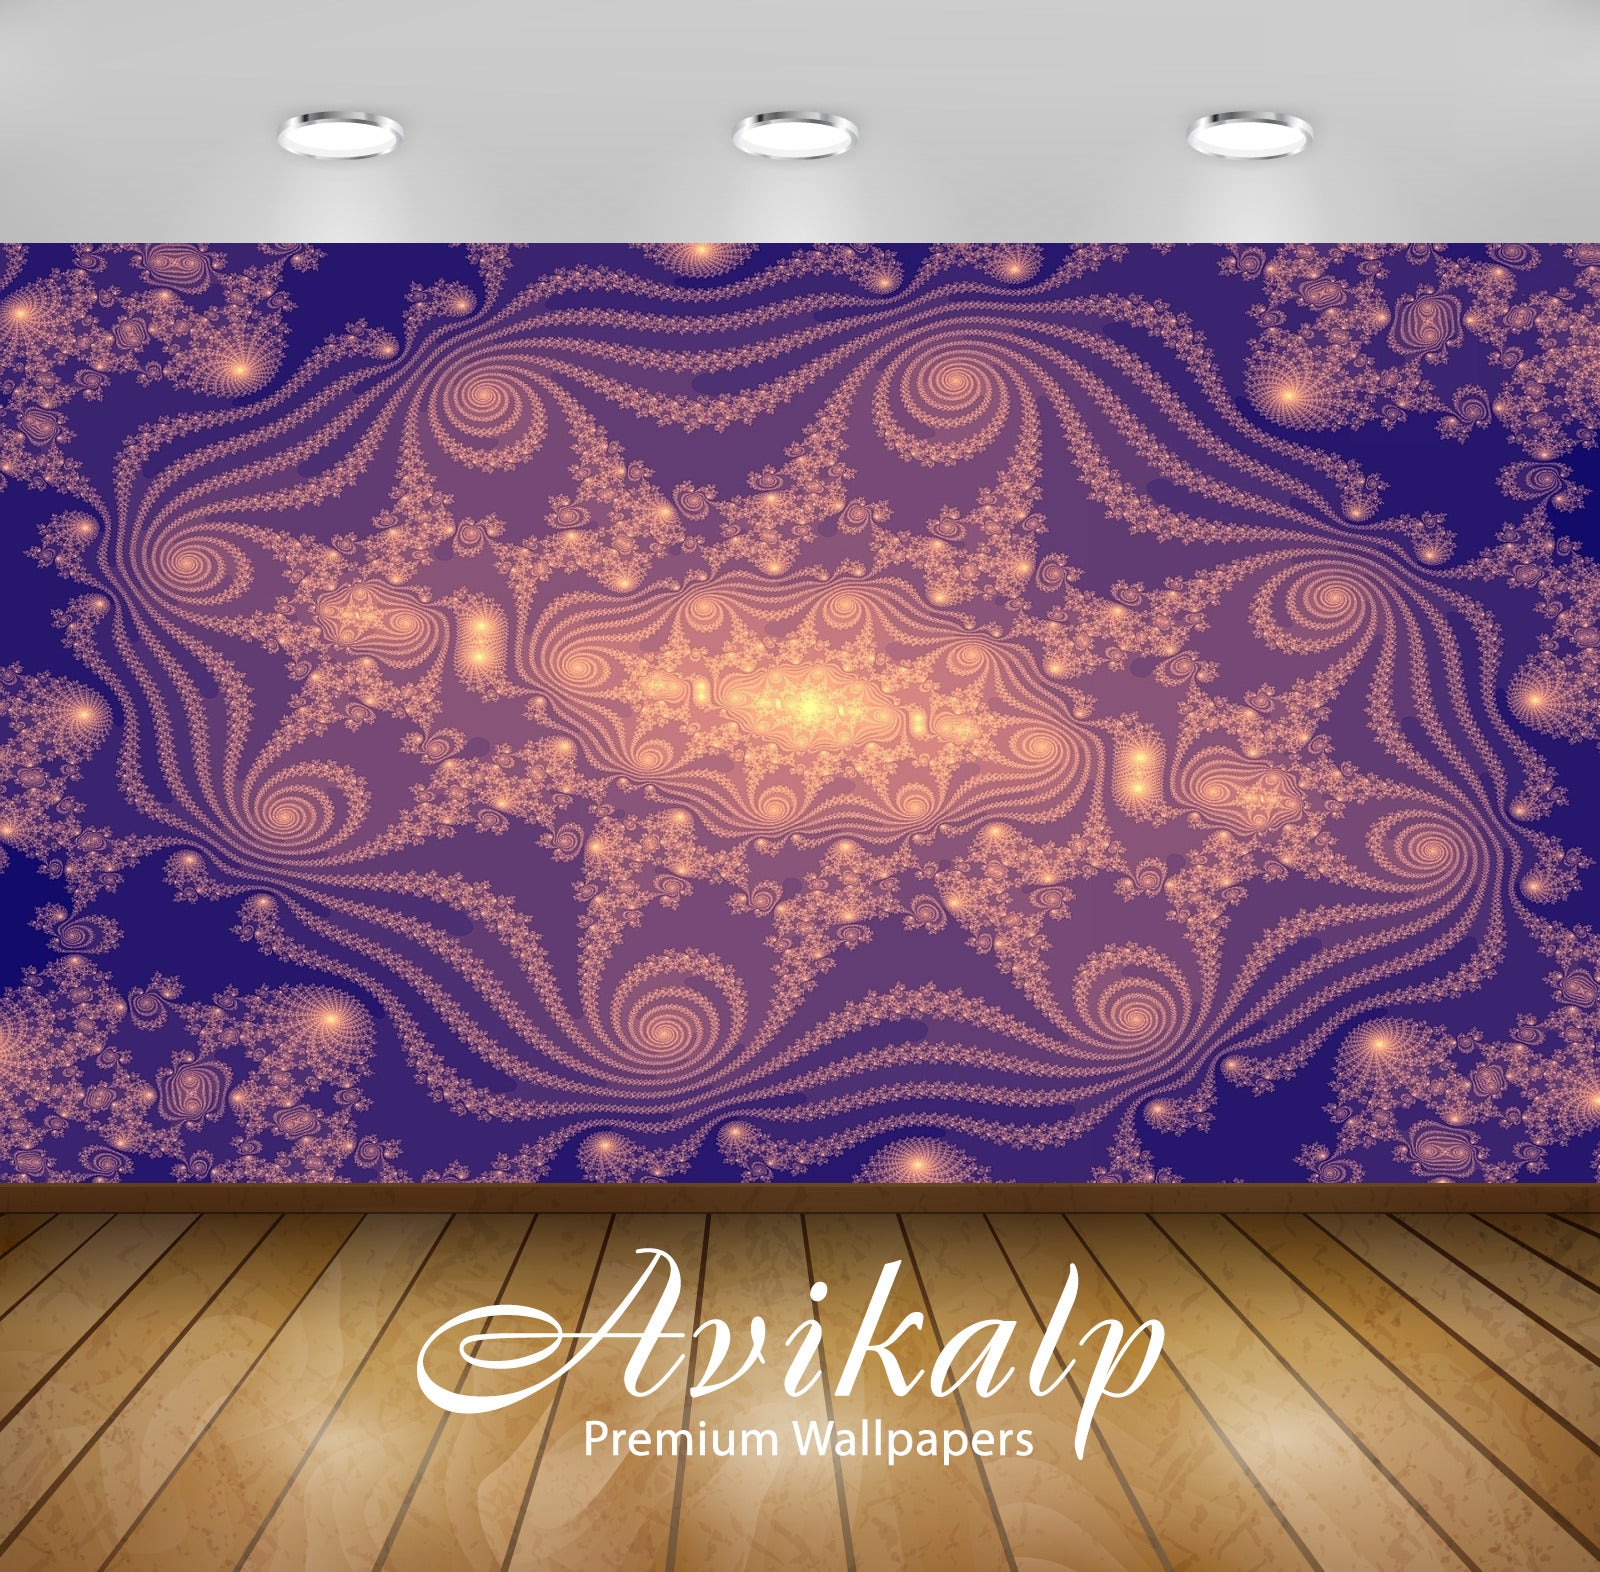 Avikalp Exclusive Awi4447 Golden Fractal Swirls Full HD Wallpapers for Living room, Hall, Kids Room,